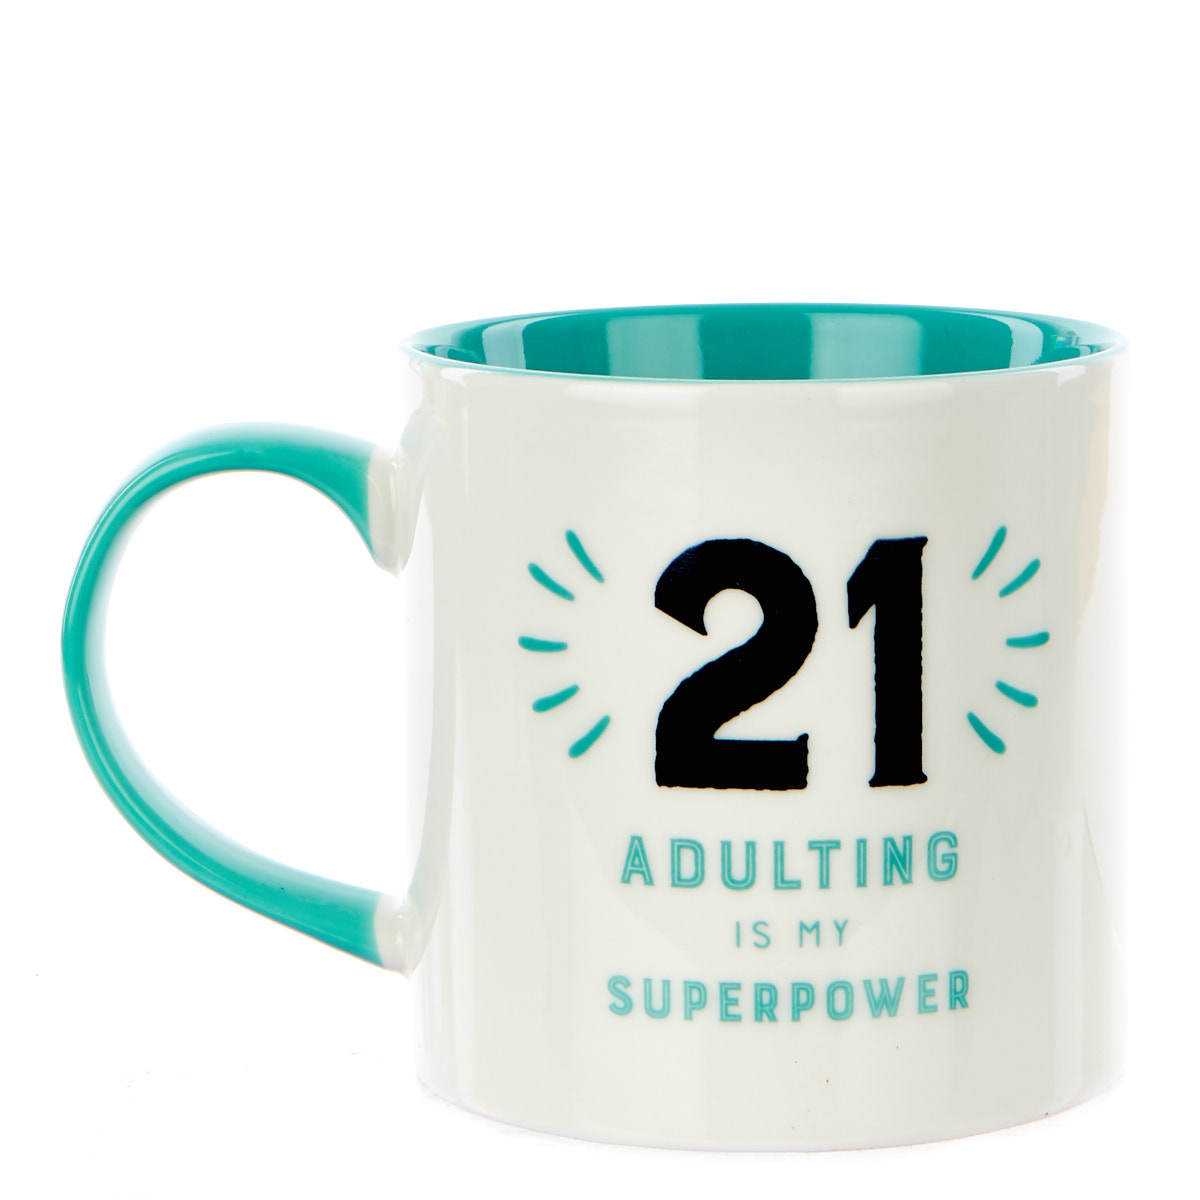 21st Birthday Mug - Adulting Is My Superpower